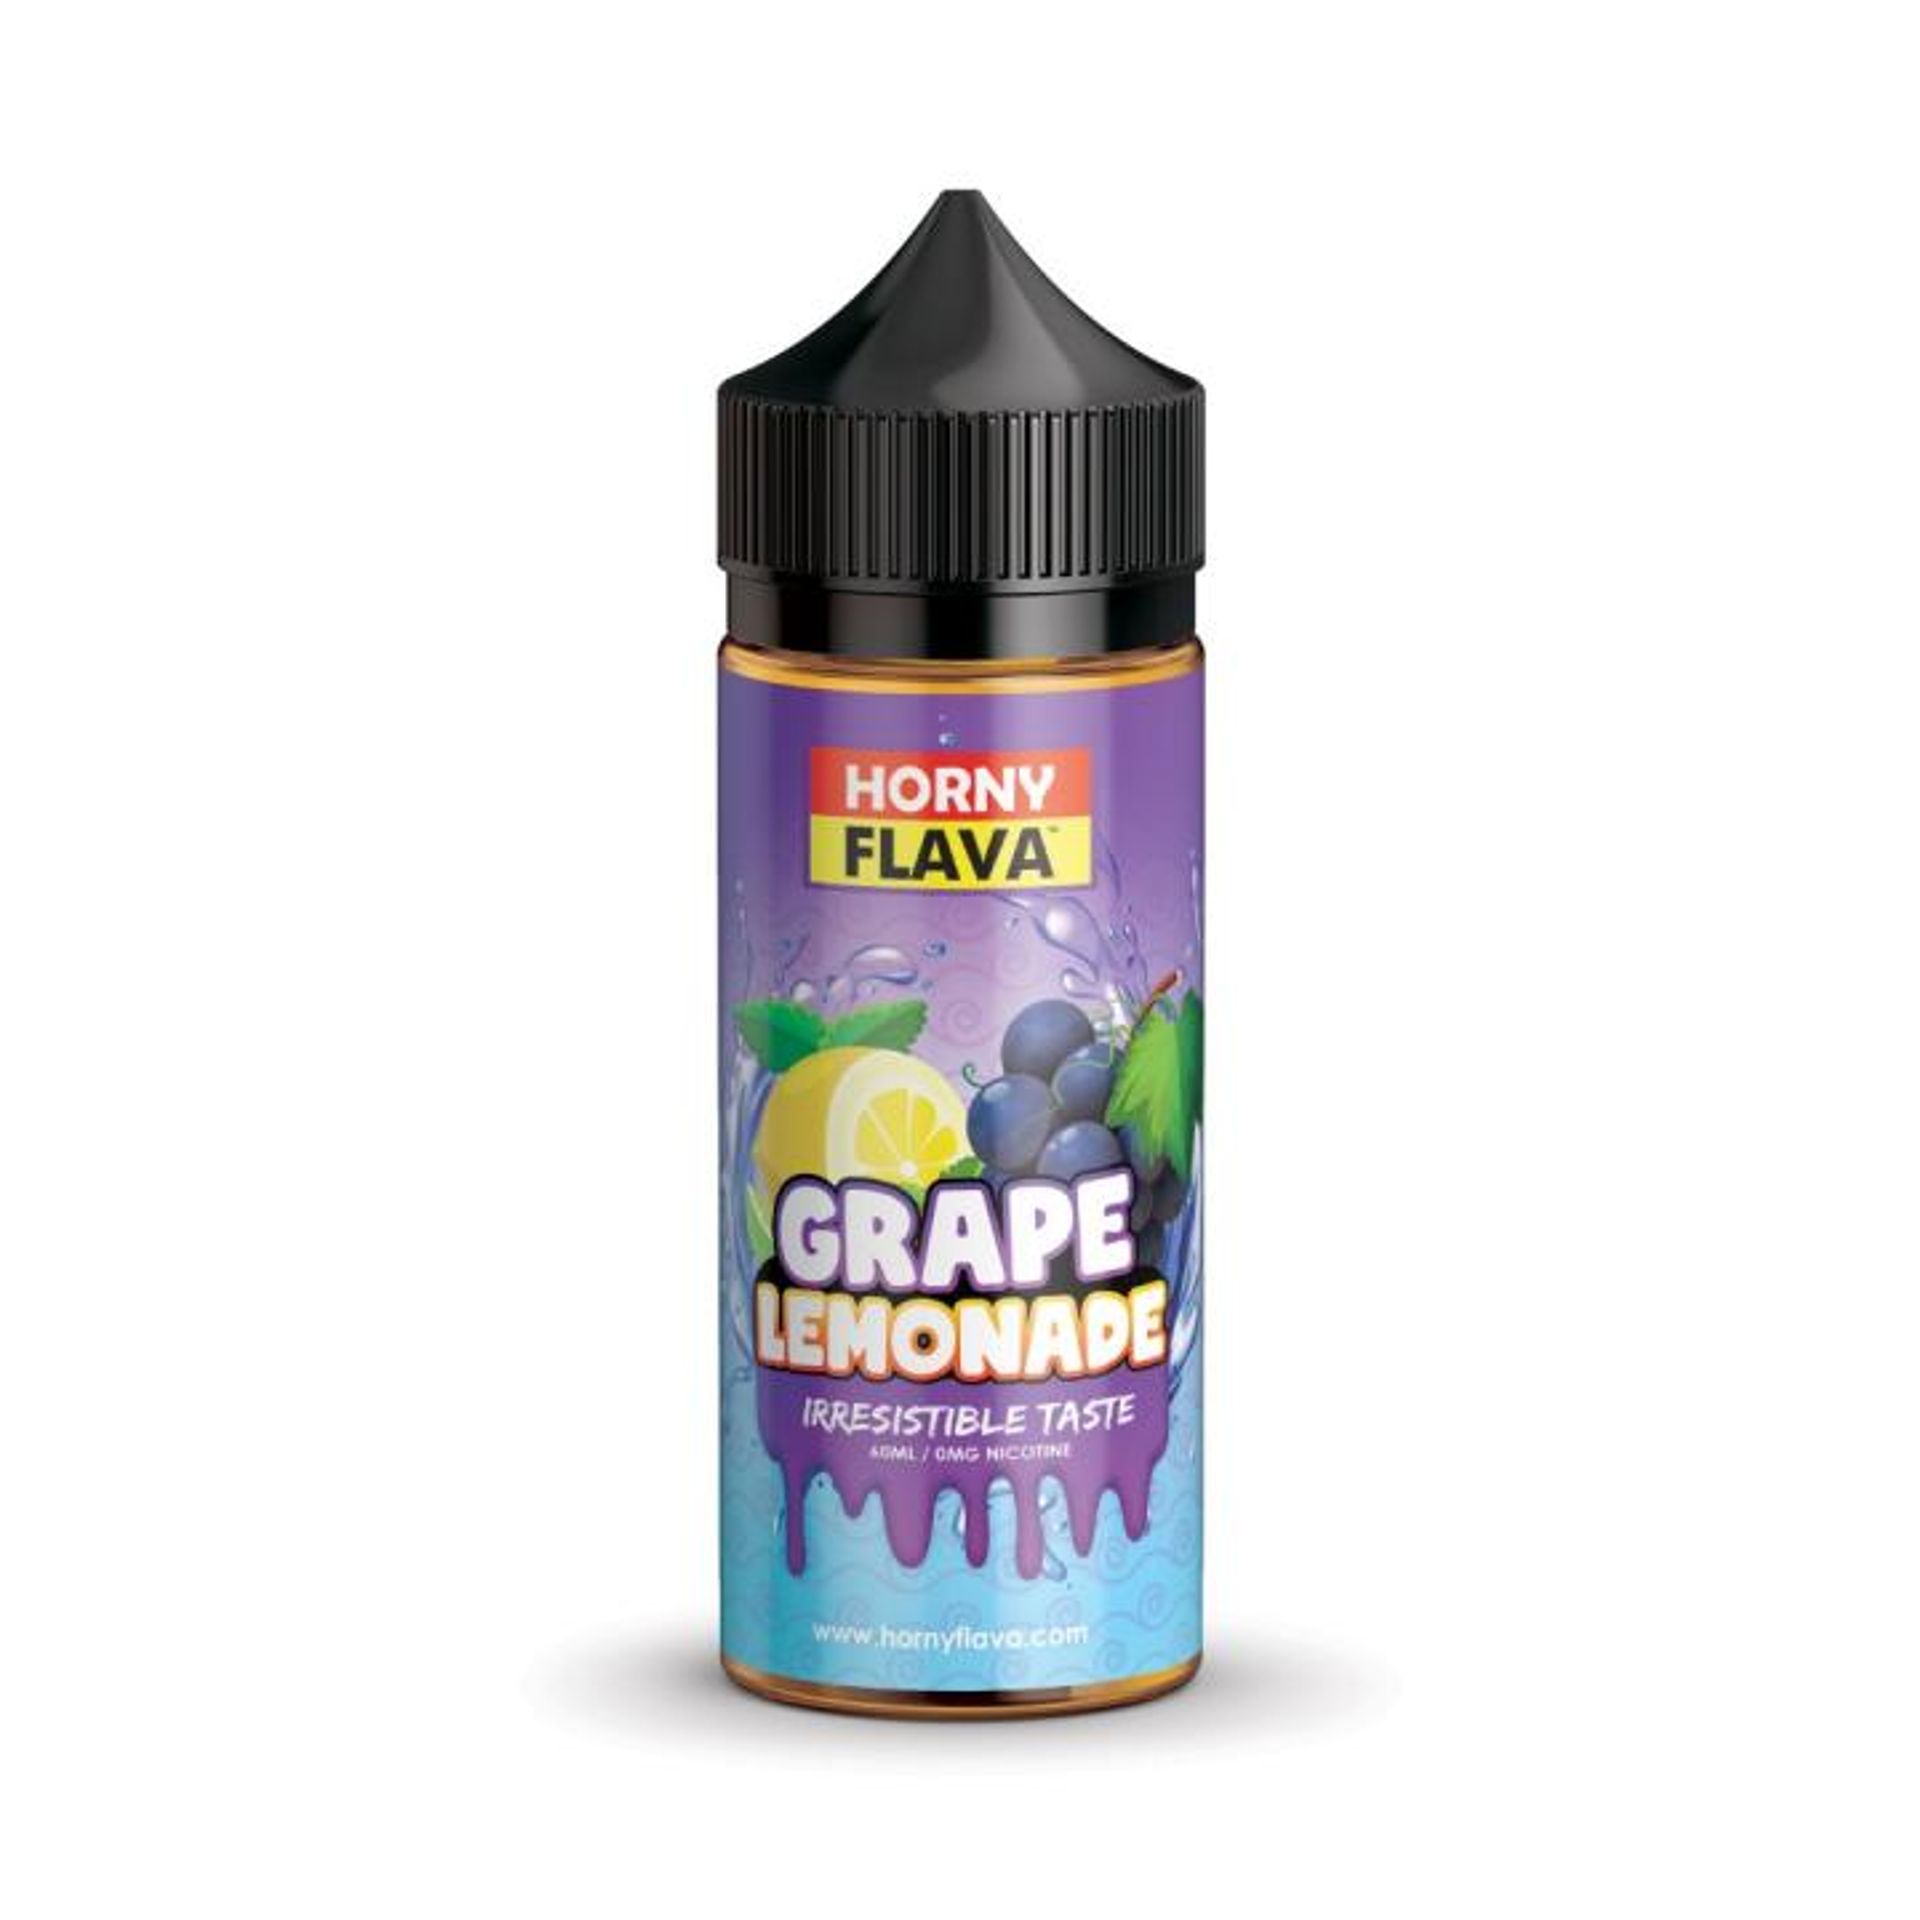 Image of Grape Lemonade by Horny Flava